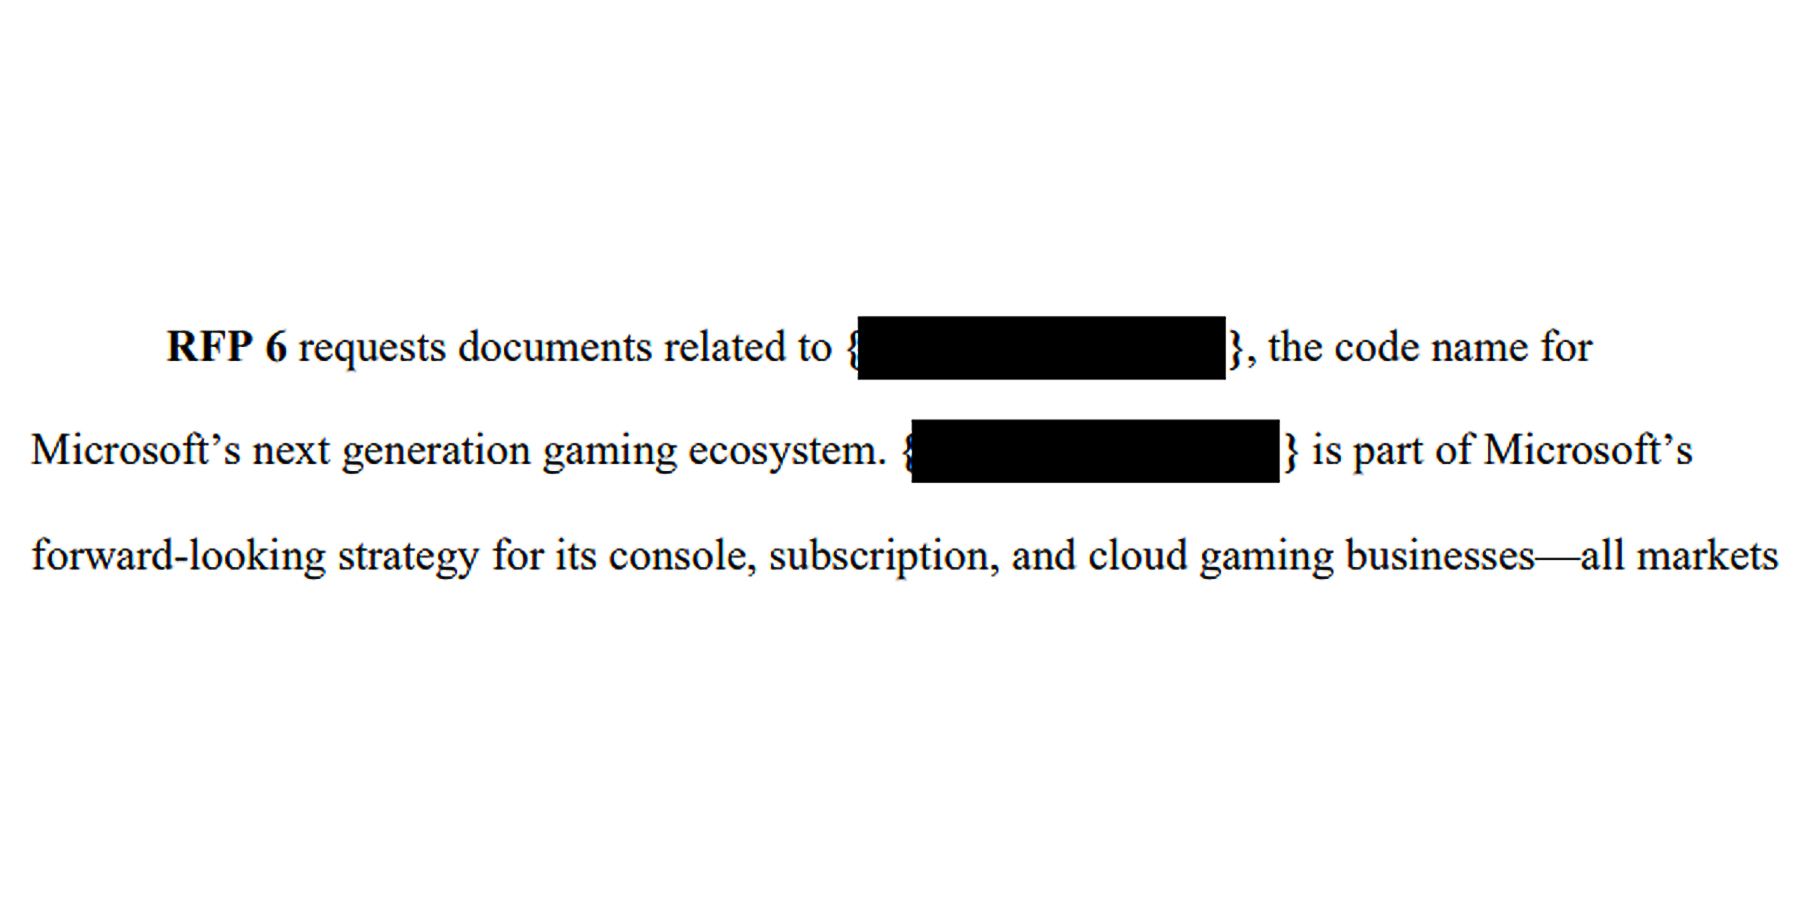 Microsoft Next Generation Xbox gaming ecosystem FTC redacted codename